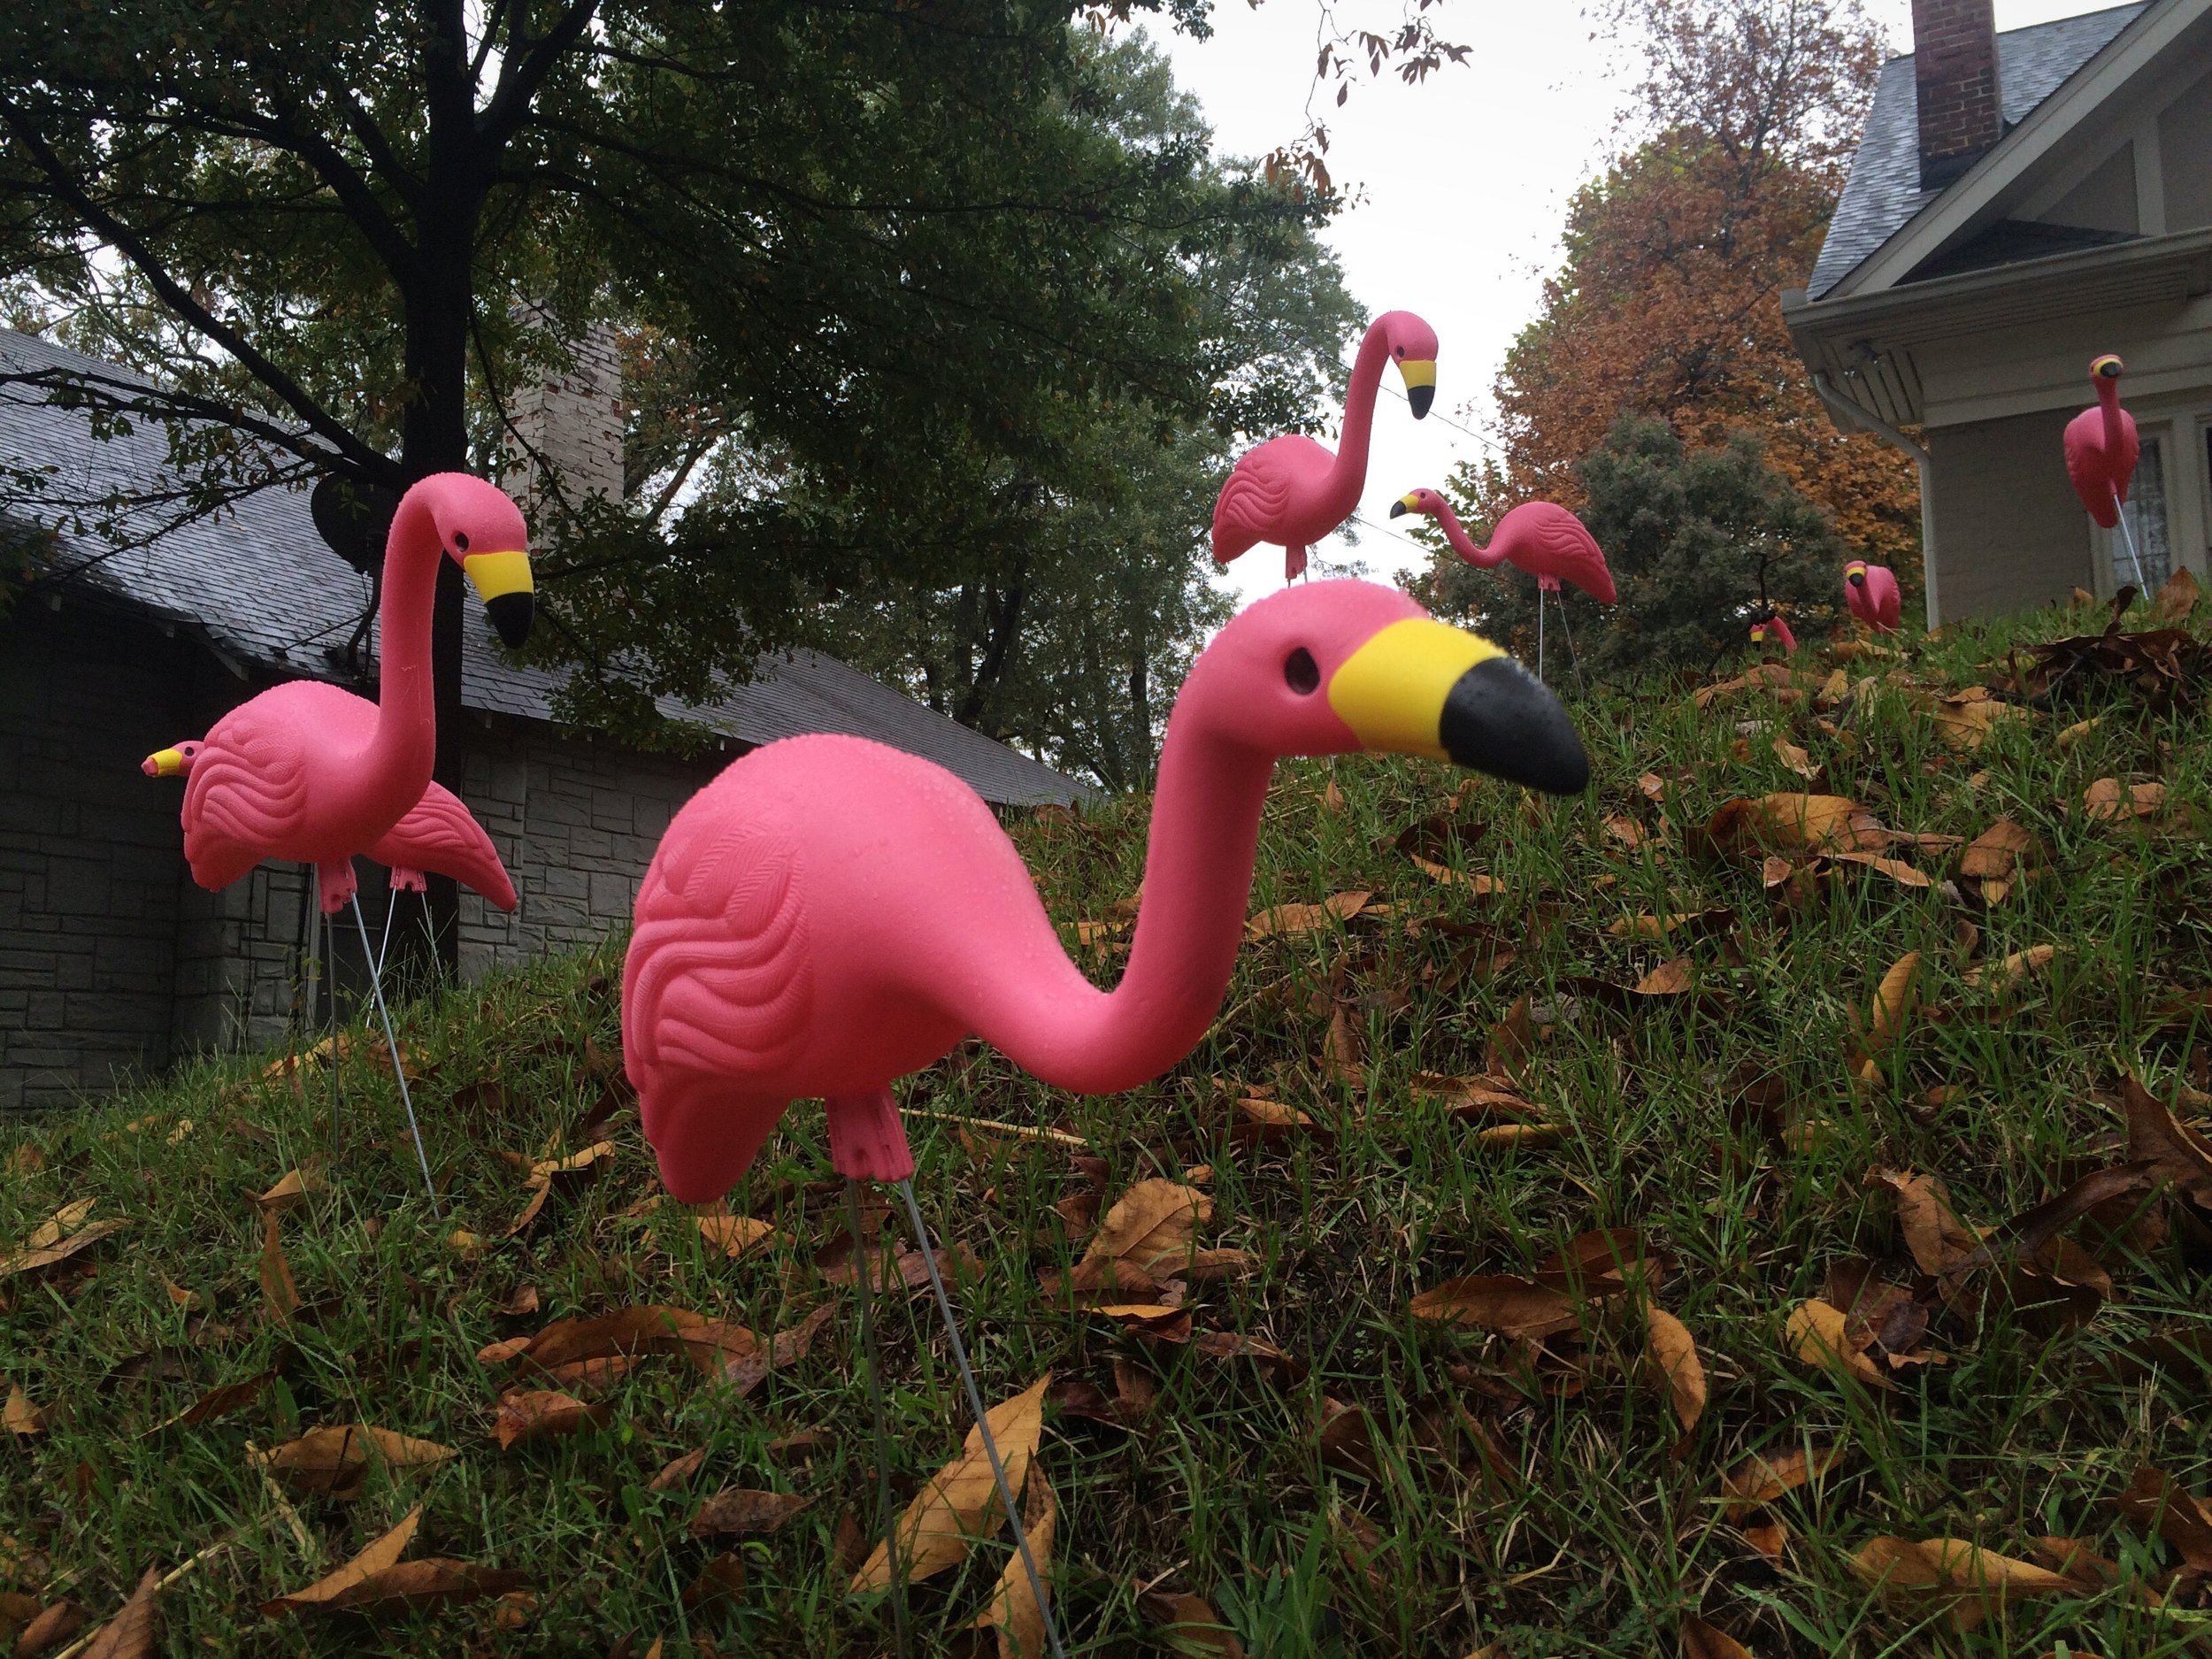 Flamingo.jpeg